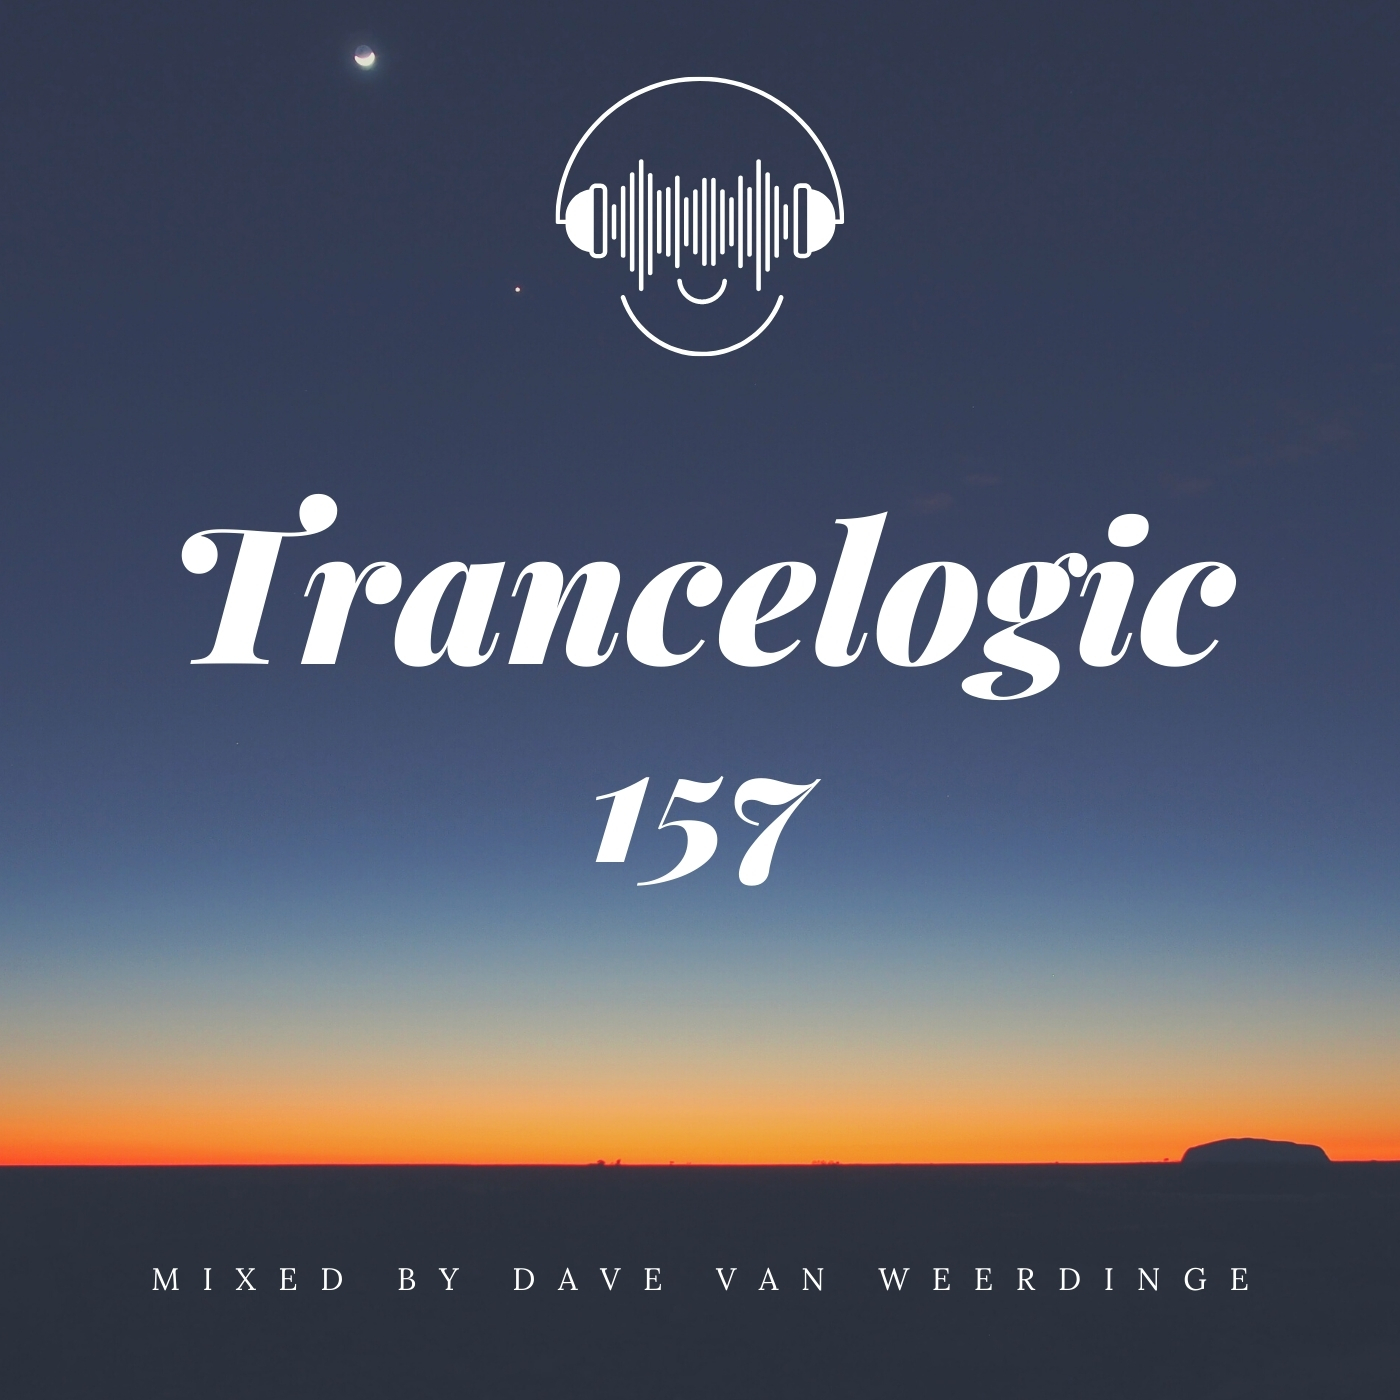 Trancelogic 157 by Dave van Weerdinge